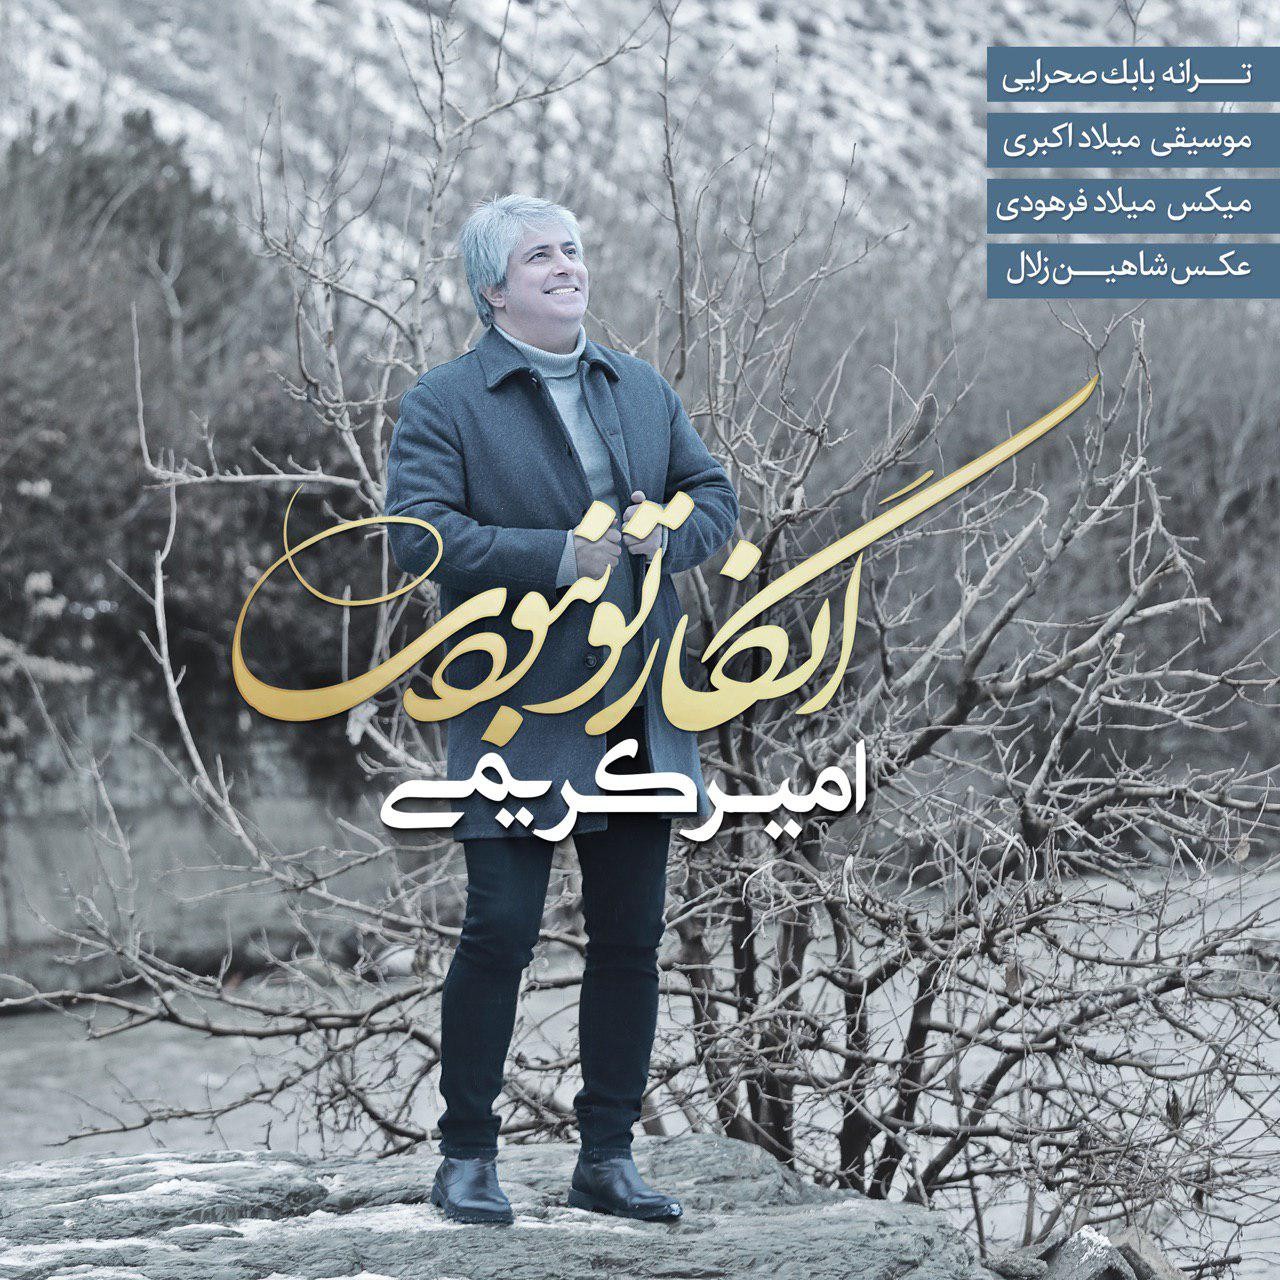  دانلود آهنگ جدید امیر کریمی - انگار تو نبودی | Download New Music By Amir Karimi - Engar To Naboodi